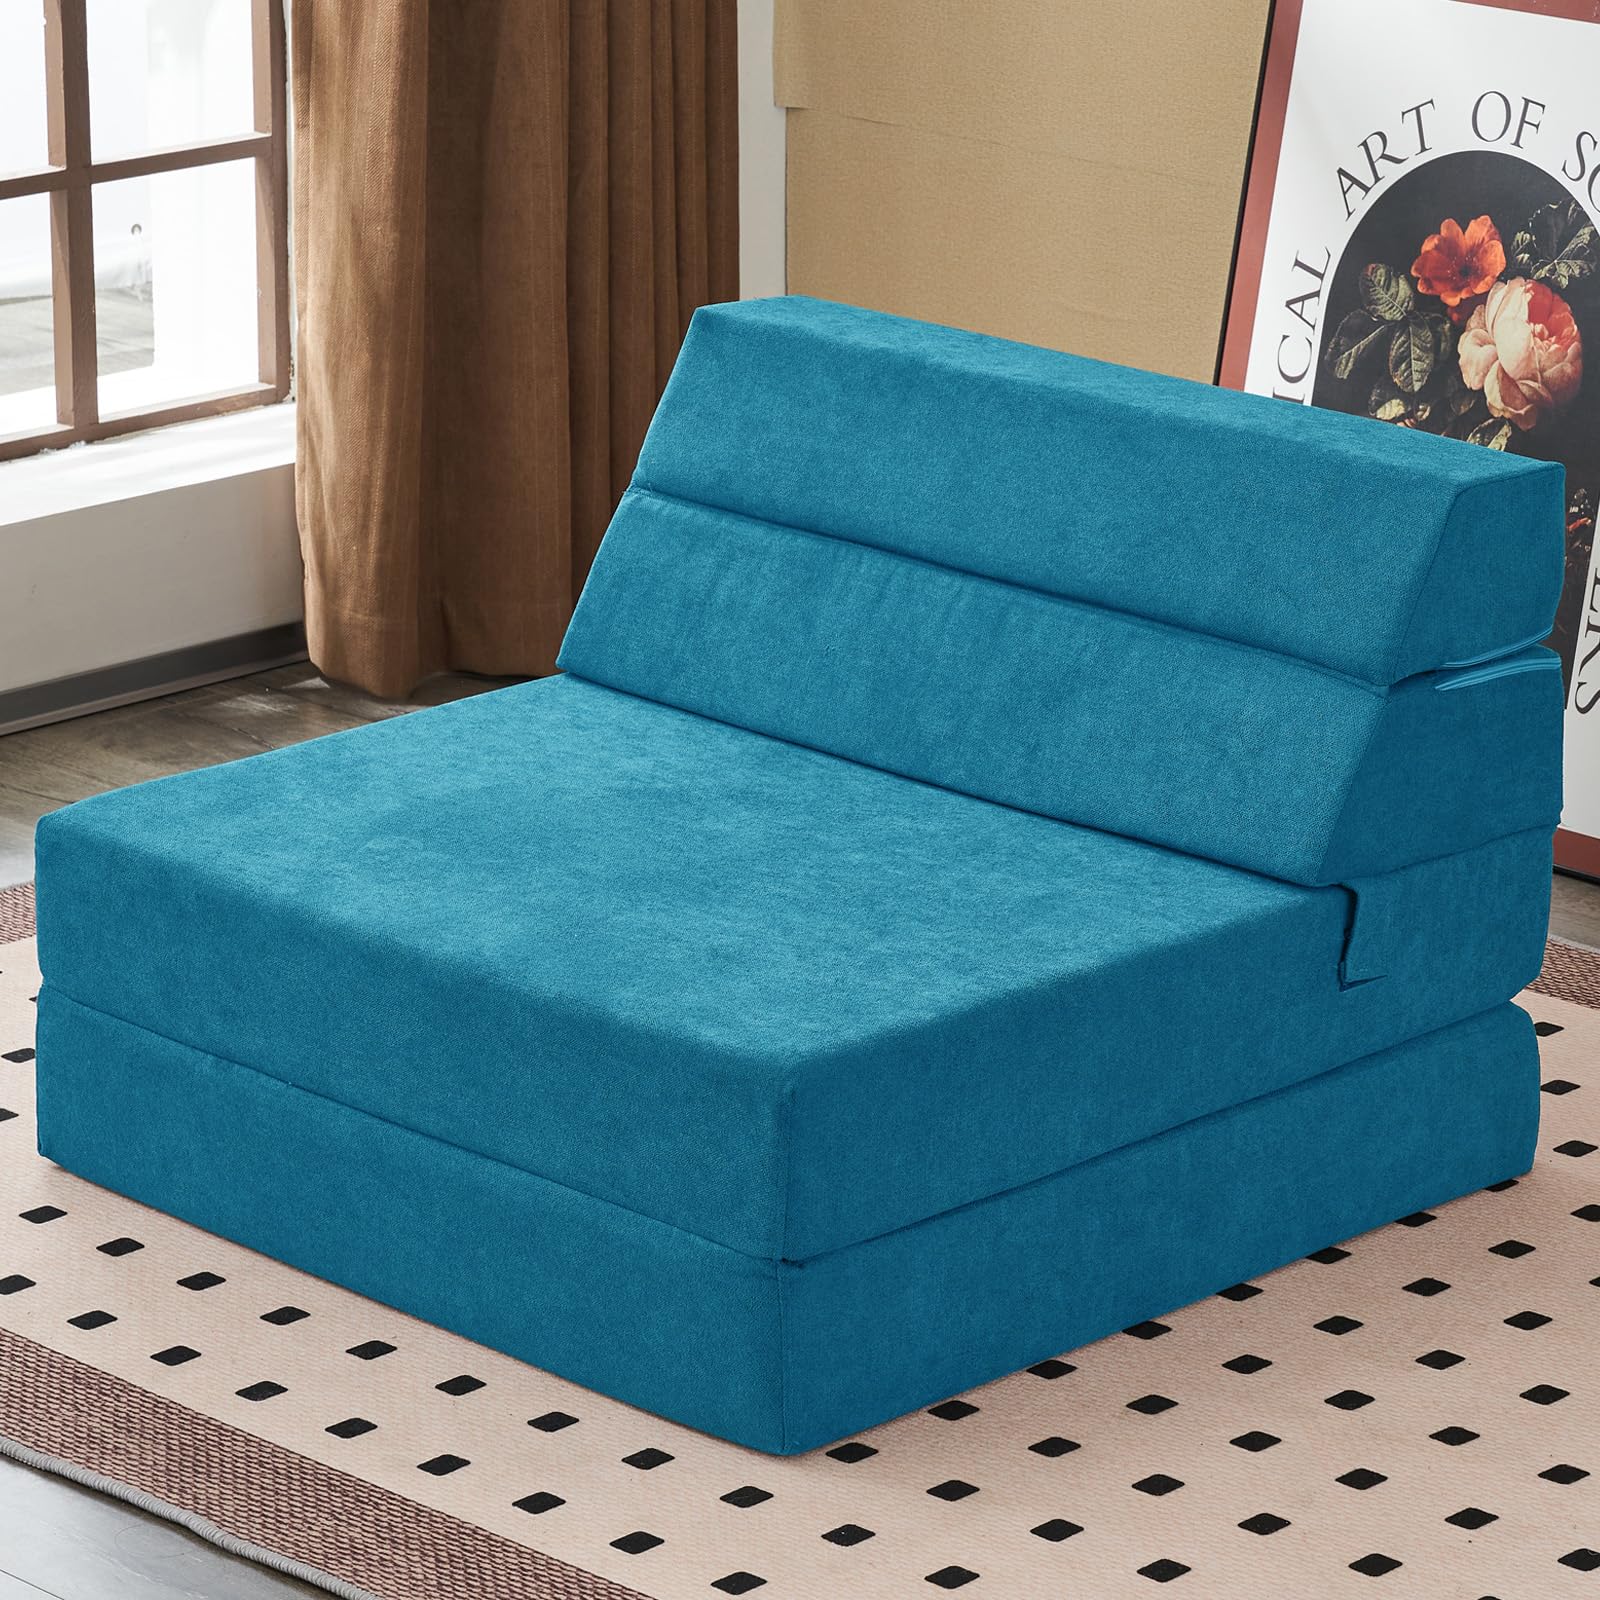 jela Sofa Bed Foldable Mattress Luxury Miss Fabric, Folding Sleeper Sofa Chair Bed Floor Mattress Floor Couch, Fold Out Couch Futon Mattress for Guest Room, Living Room (83"x33",Lightblue)